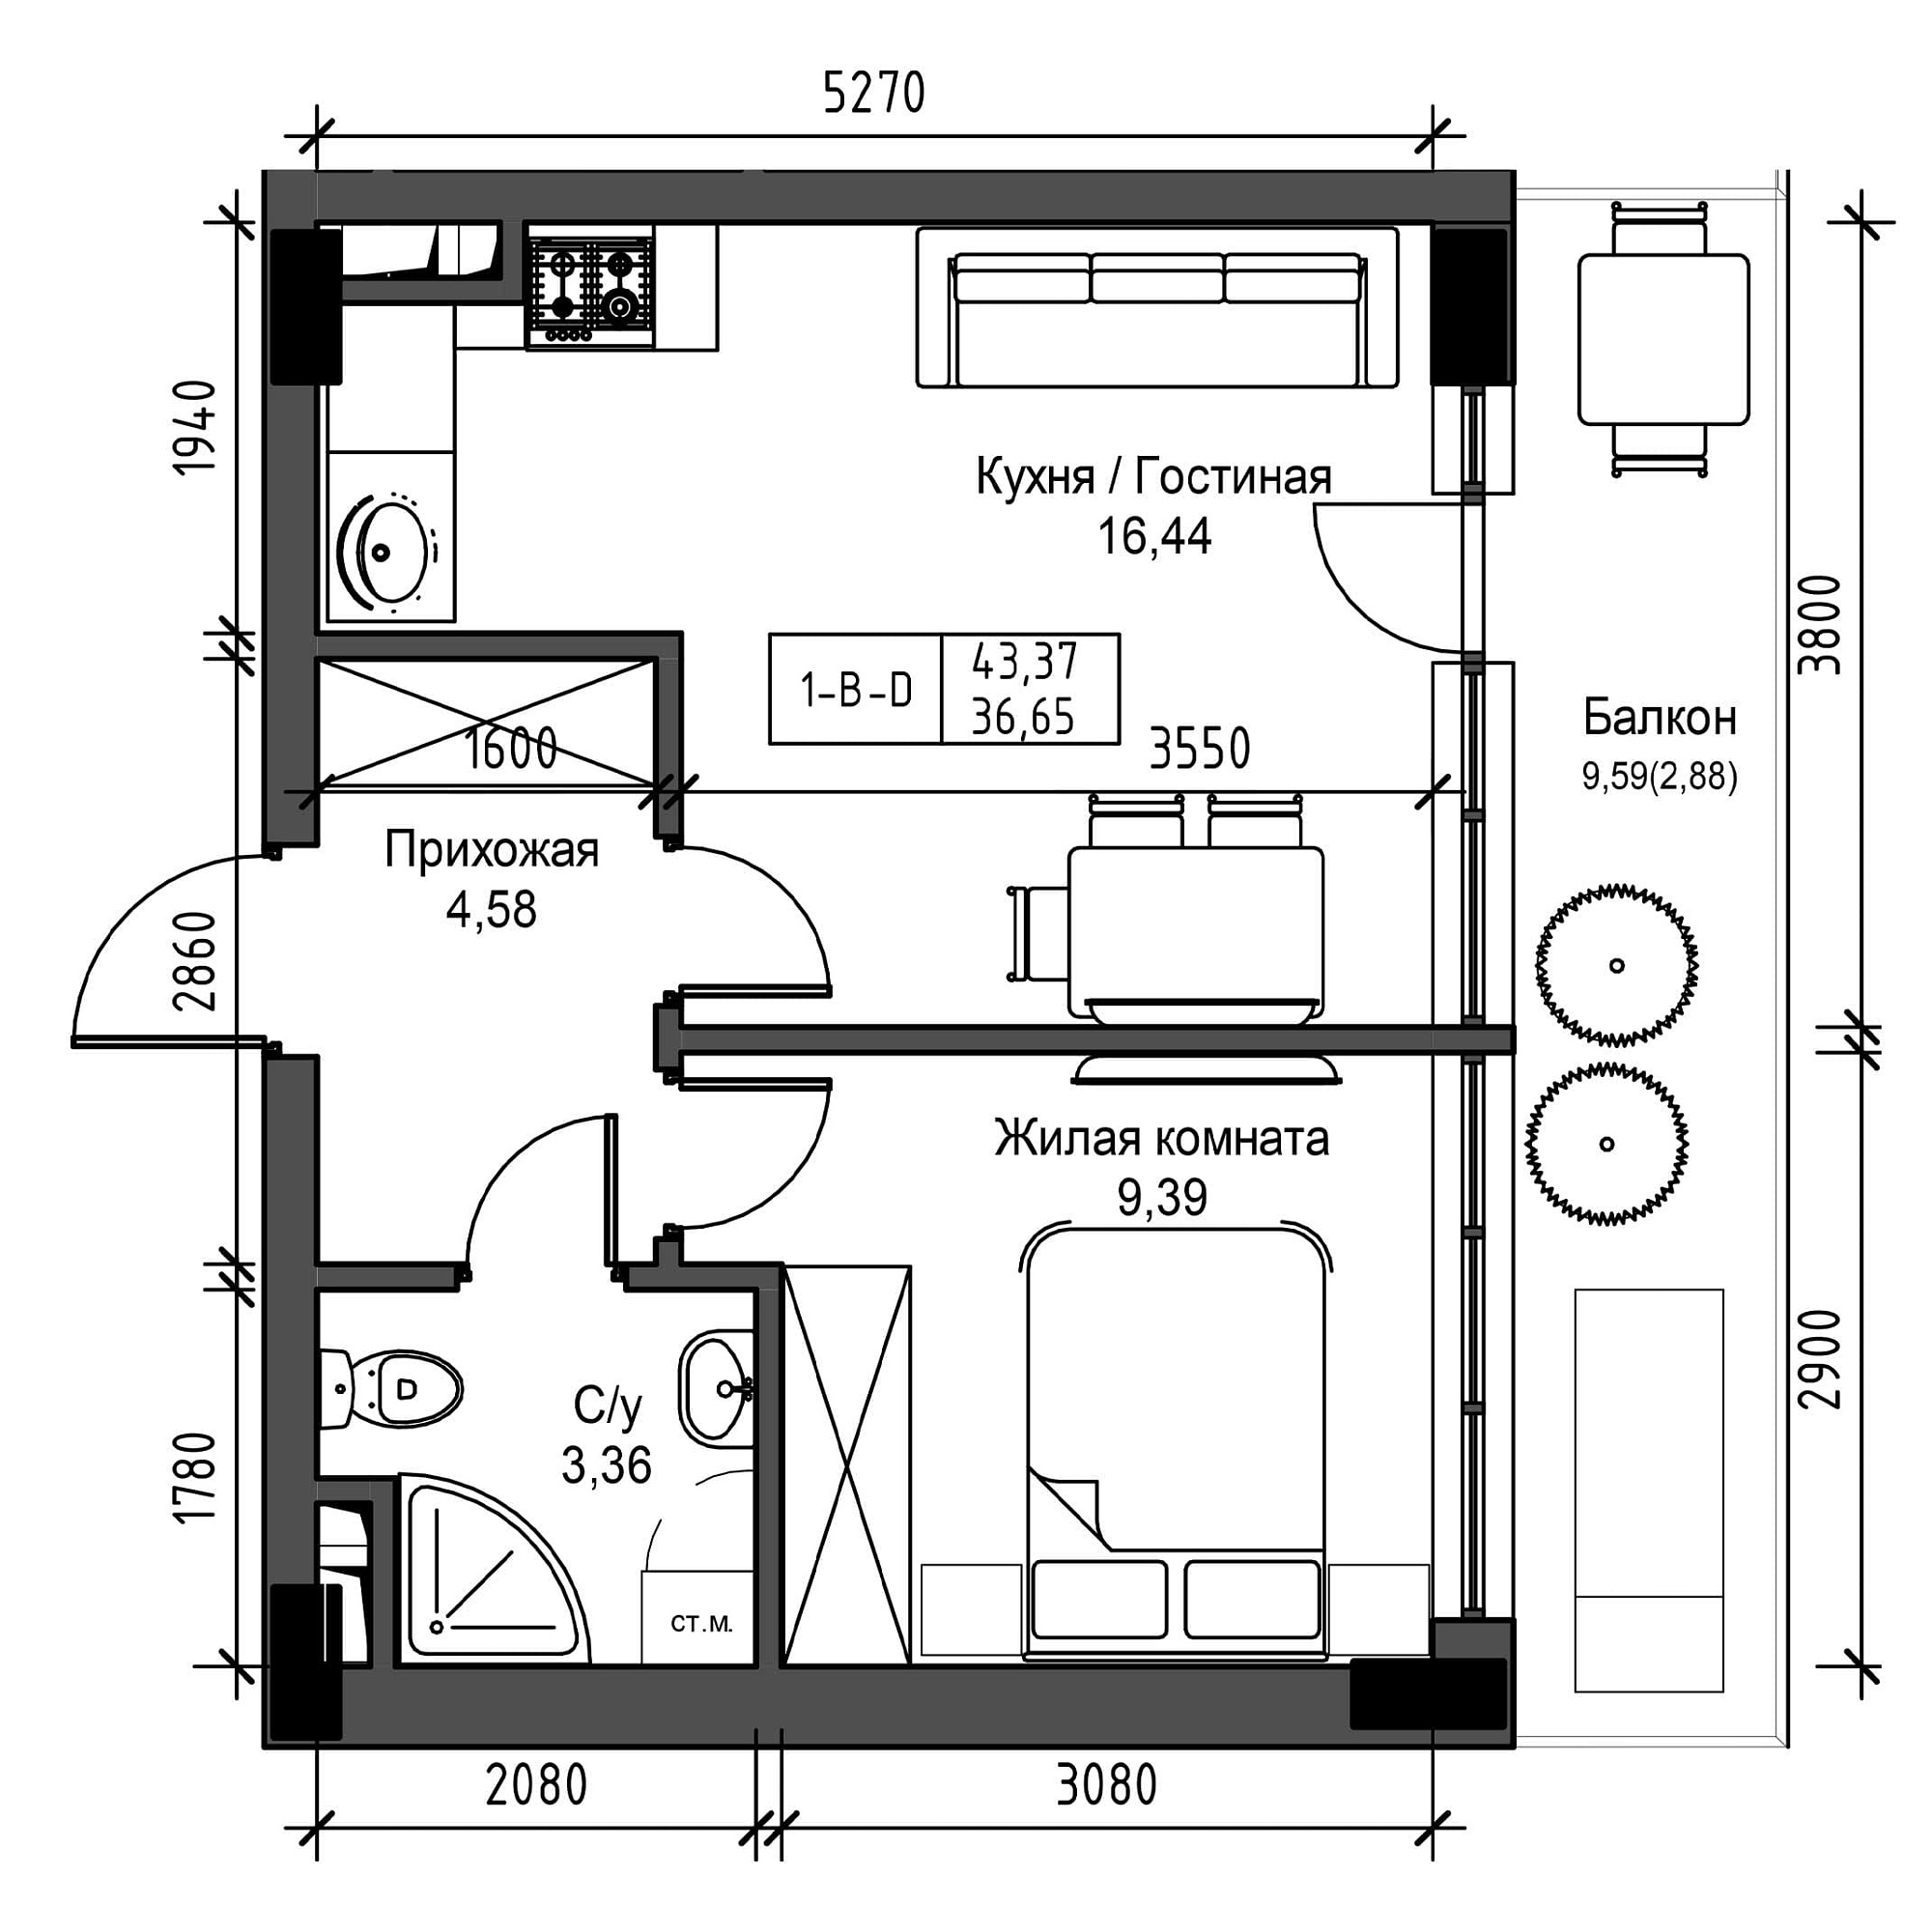 Planning 1-rm flats area 36.65m2, UM-001-08/0002.